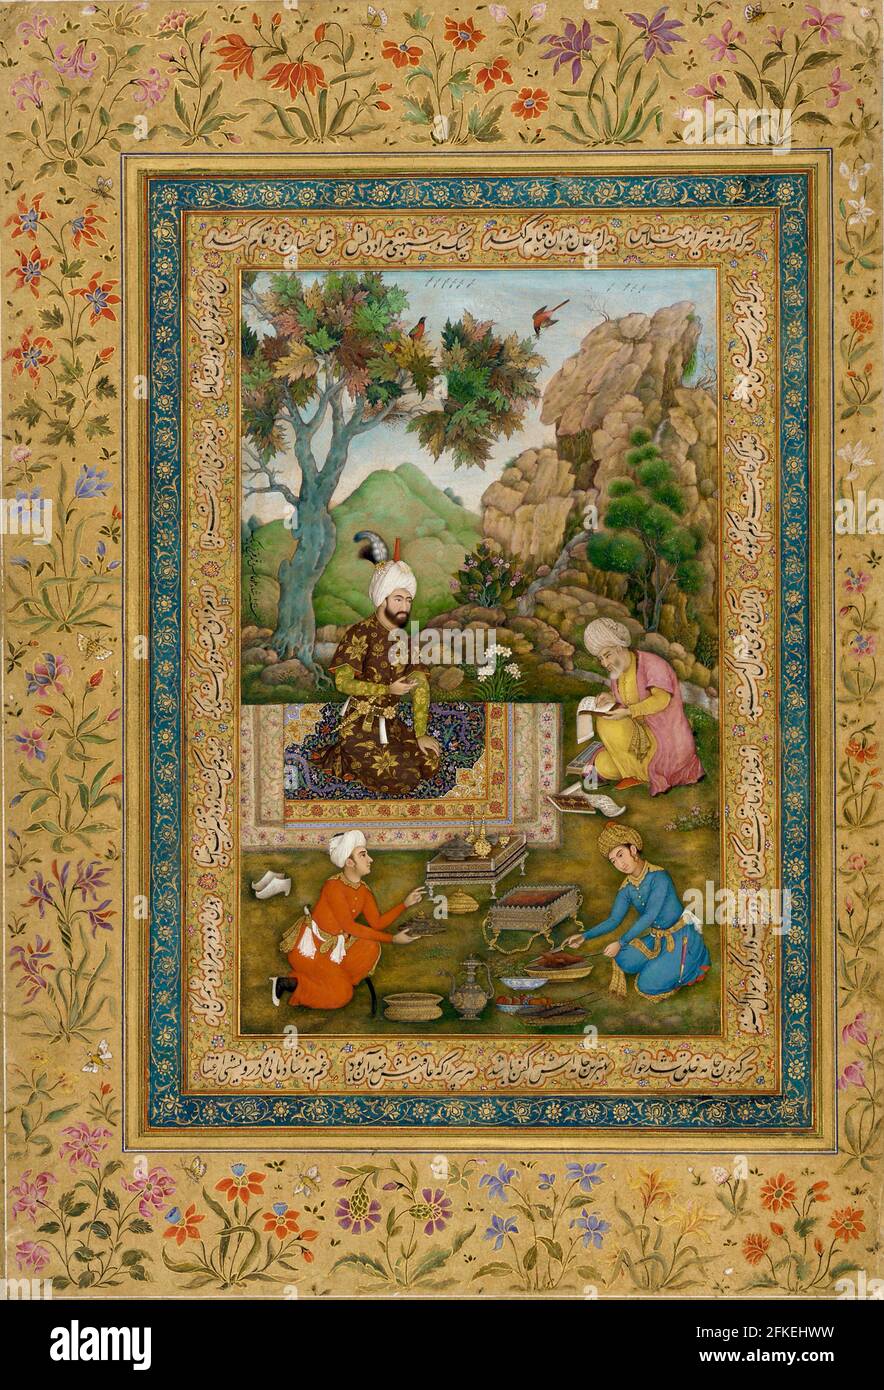 Farrukh Beg artwork entitled Shah Tahmasp in the Mountains - 16th Century. Stock Photo